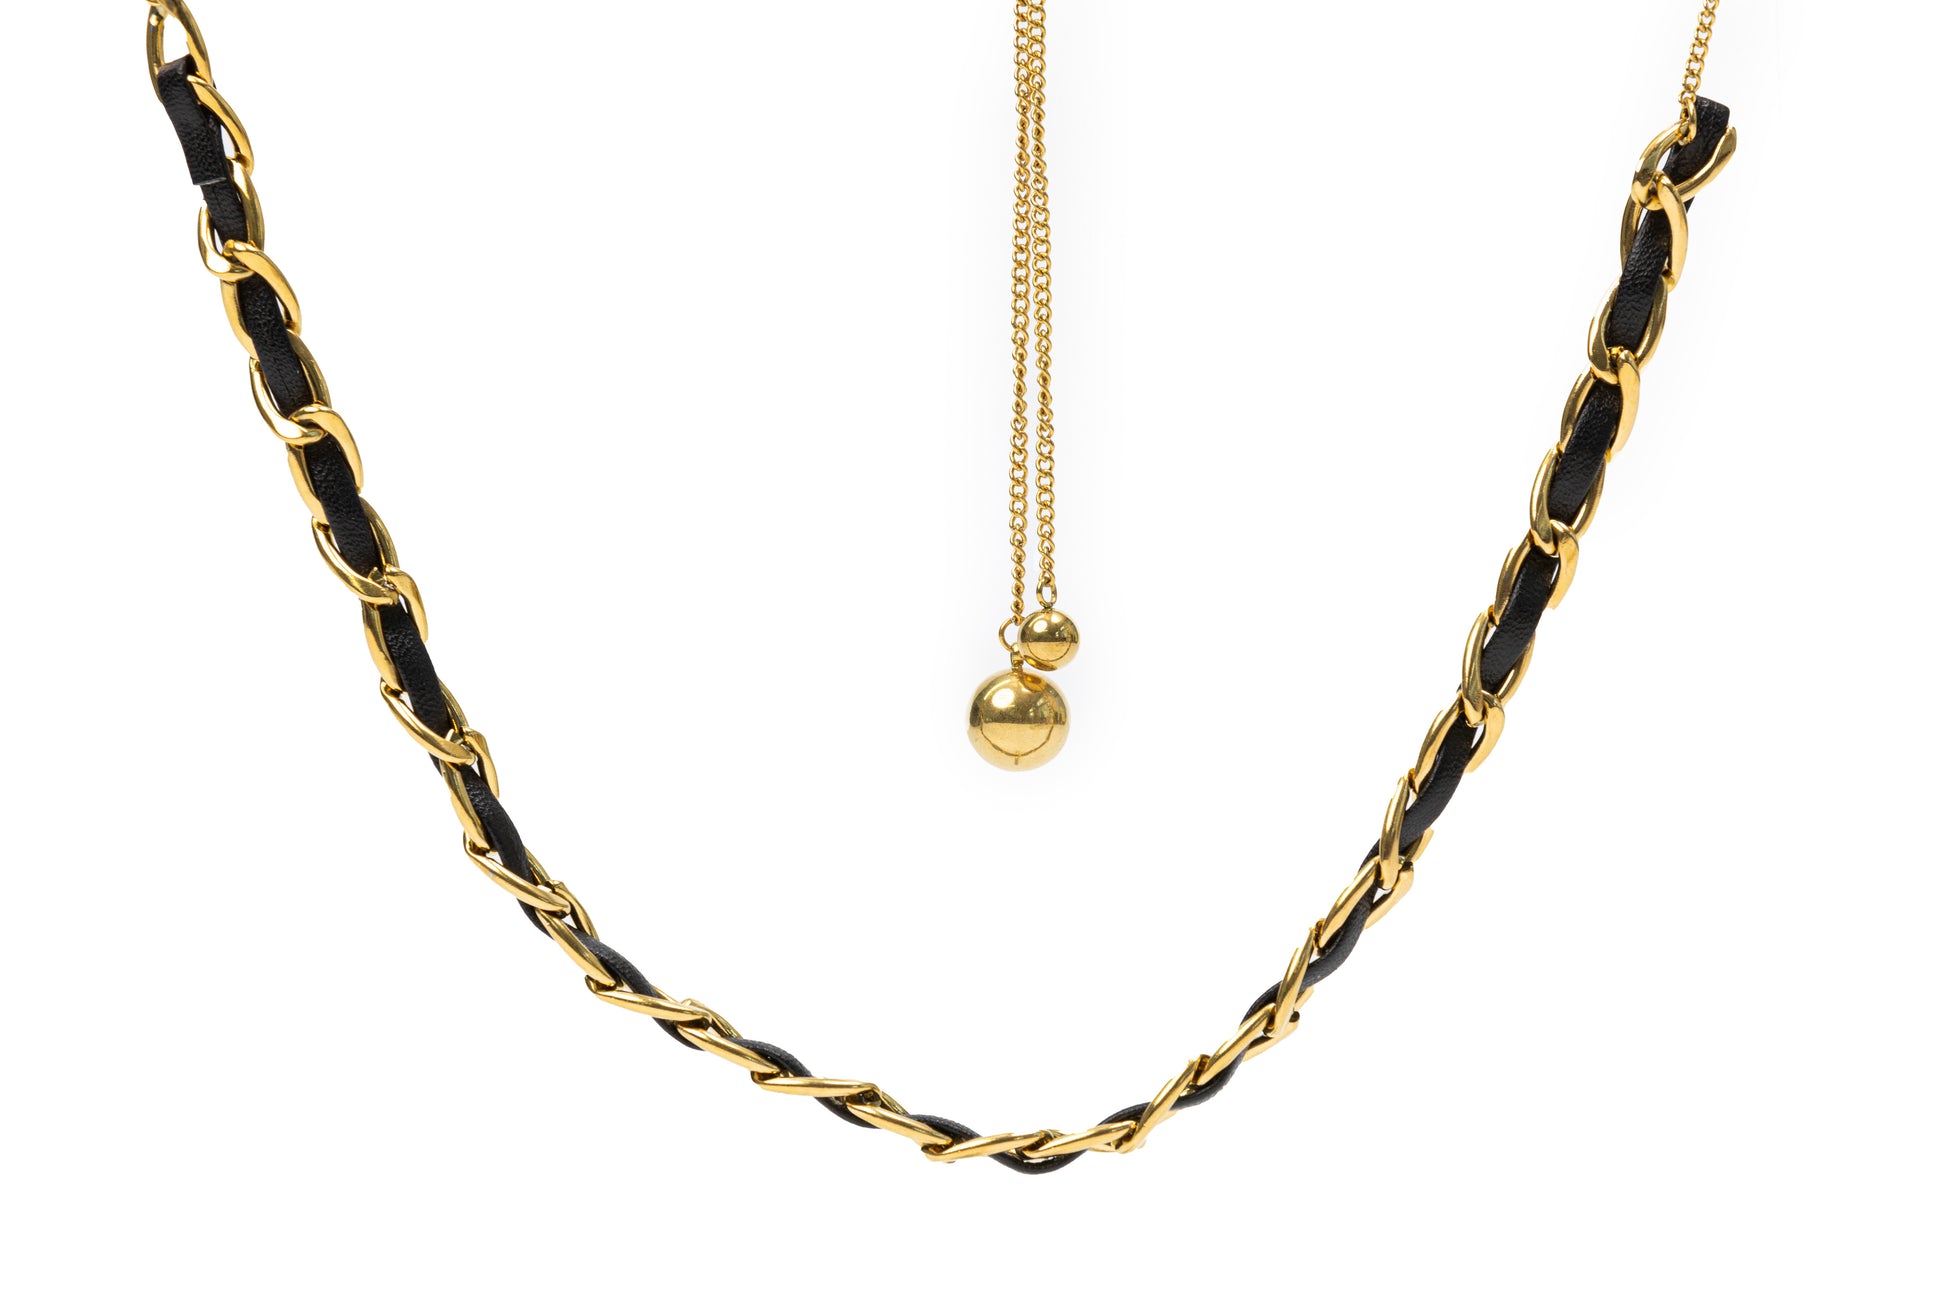 Planderful Golden Leather Necklace - Golden Necklace for Women